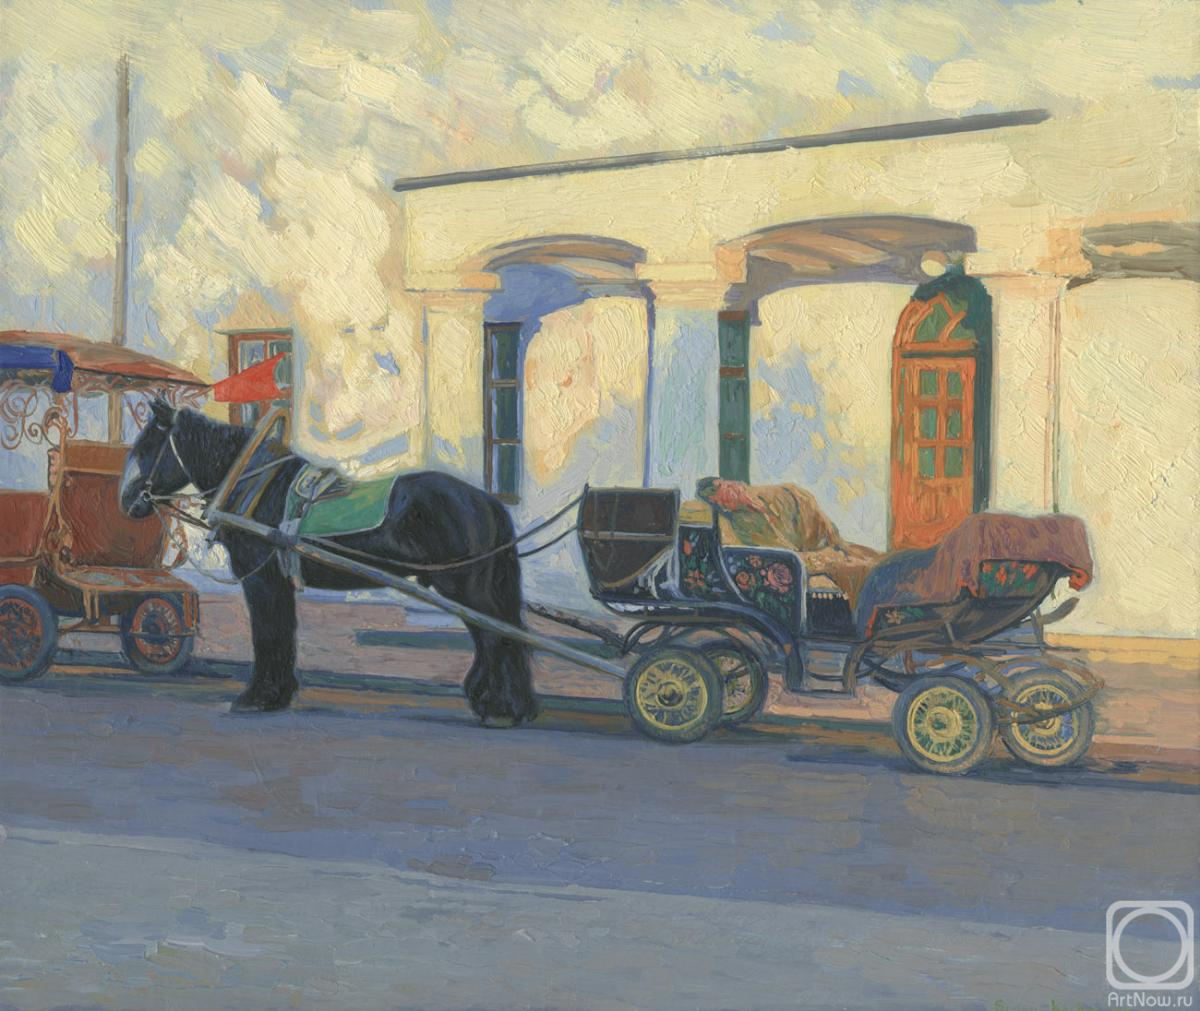 Kozhin Simon. The cart with the horse. Suzdal